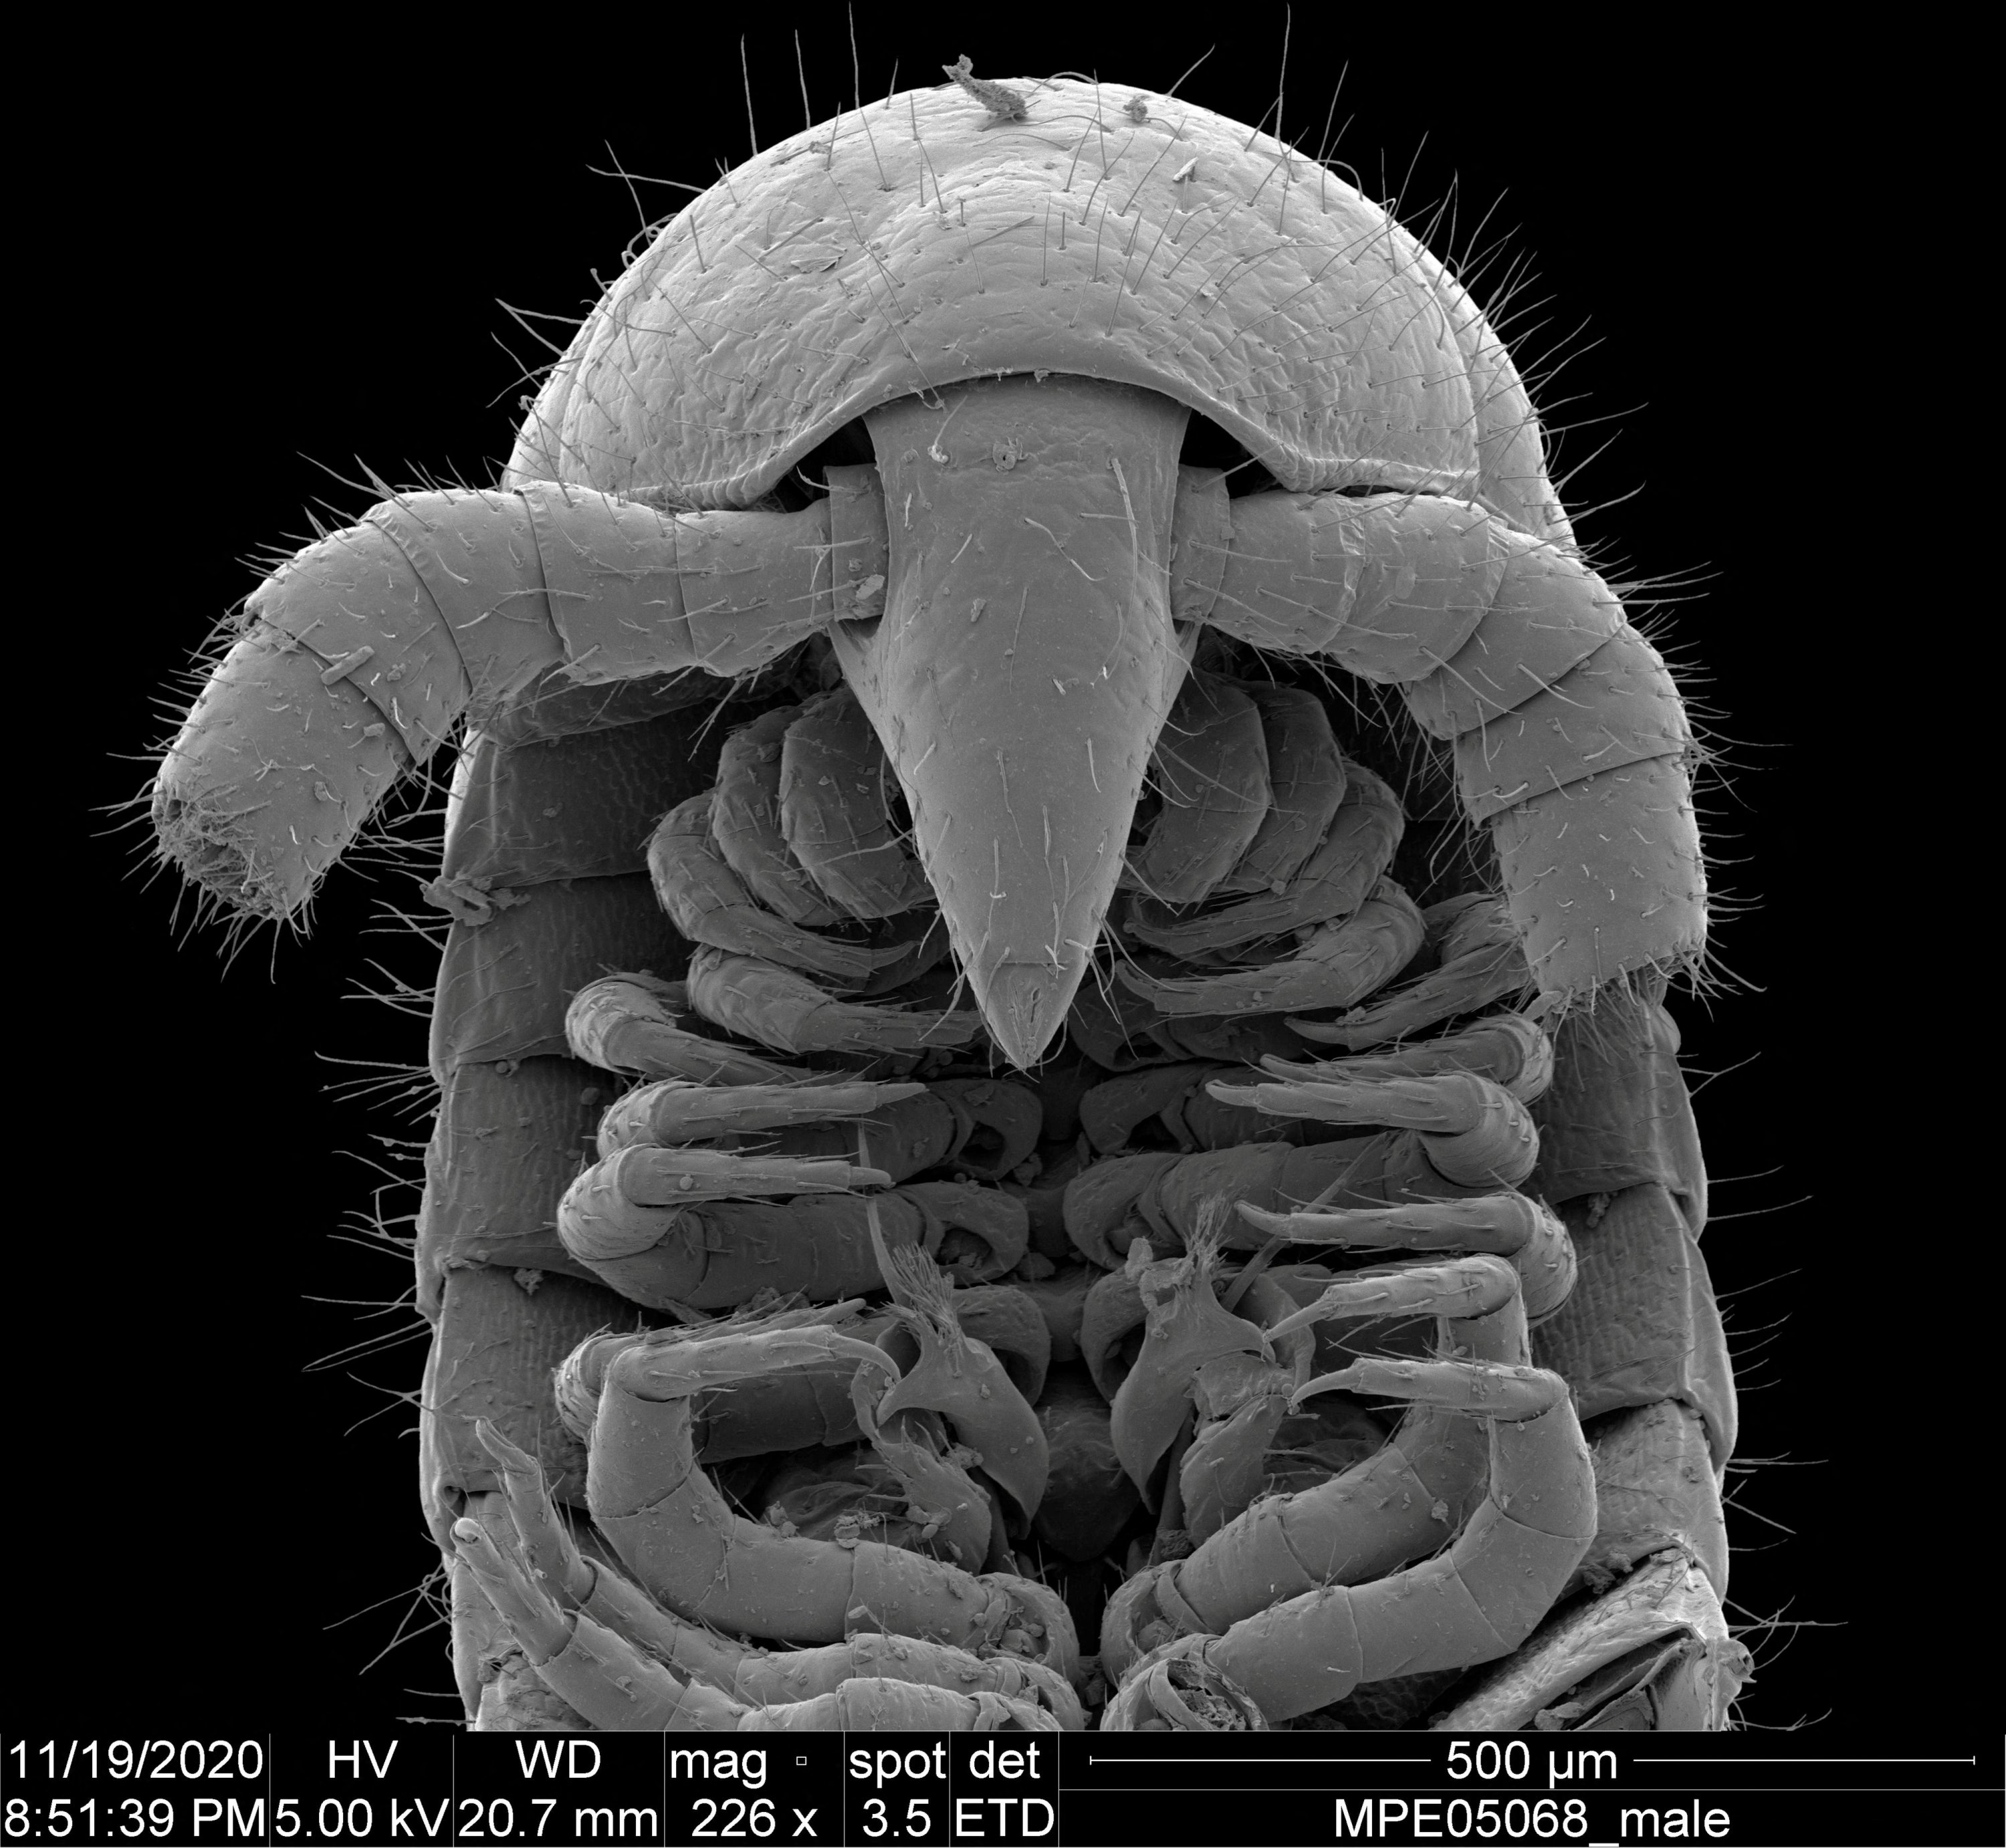 Sebuah pandangan mikroskopis dari kepala dan pelengkap reproduksi yang disebut gonopoda dari individu laki-laki dari spesies kaki seribu tanpa mata yang baru diidentifikasi Eumillipes persephone ditemukan jauh di bawah tanah di Australia.  (Foto Reuters)